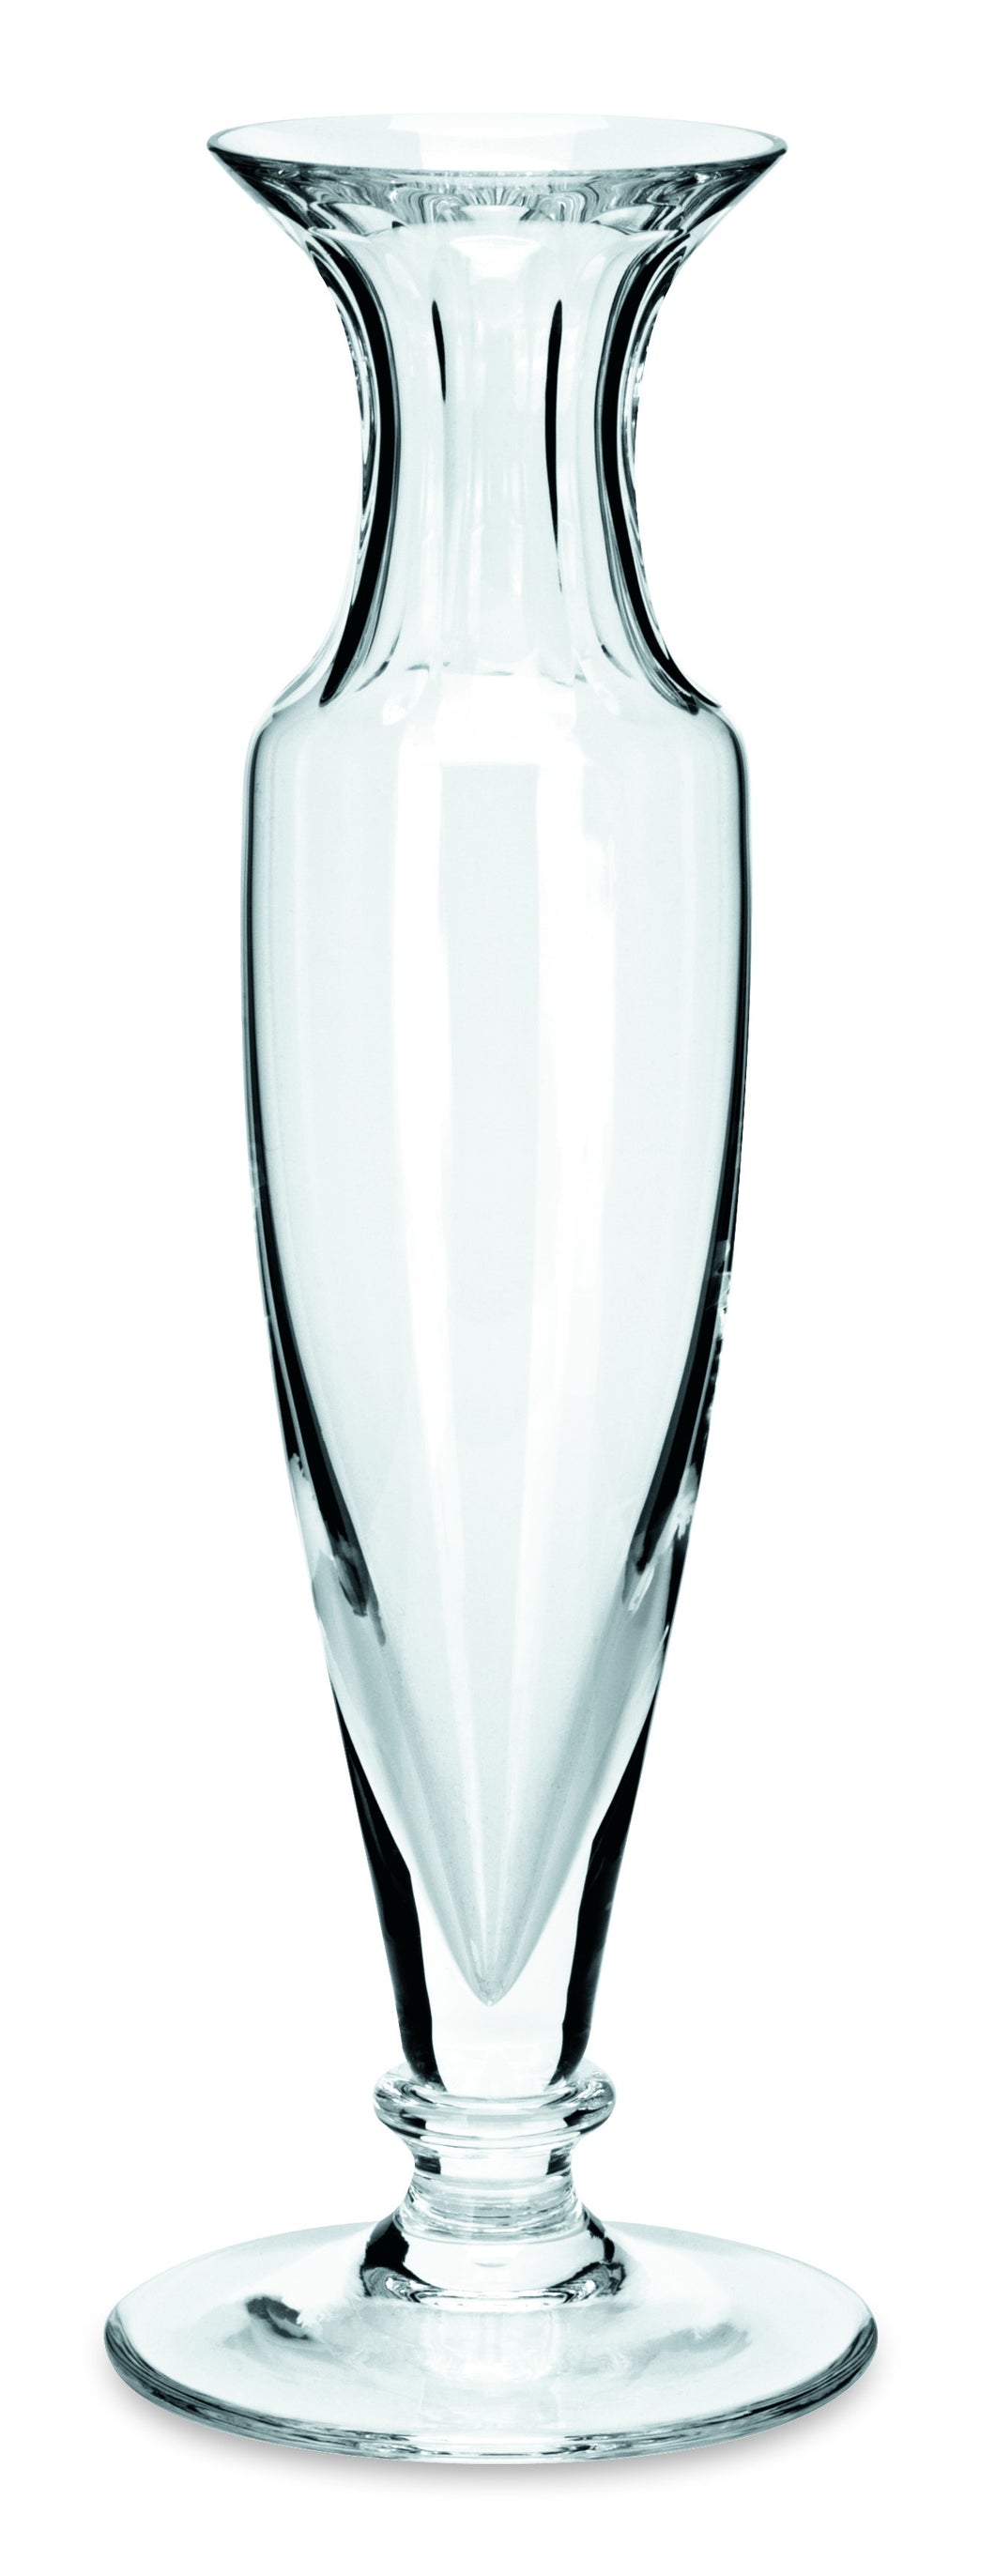 CHARLOTTE klar, Schliff - Solifleur Vase 206 mm